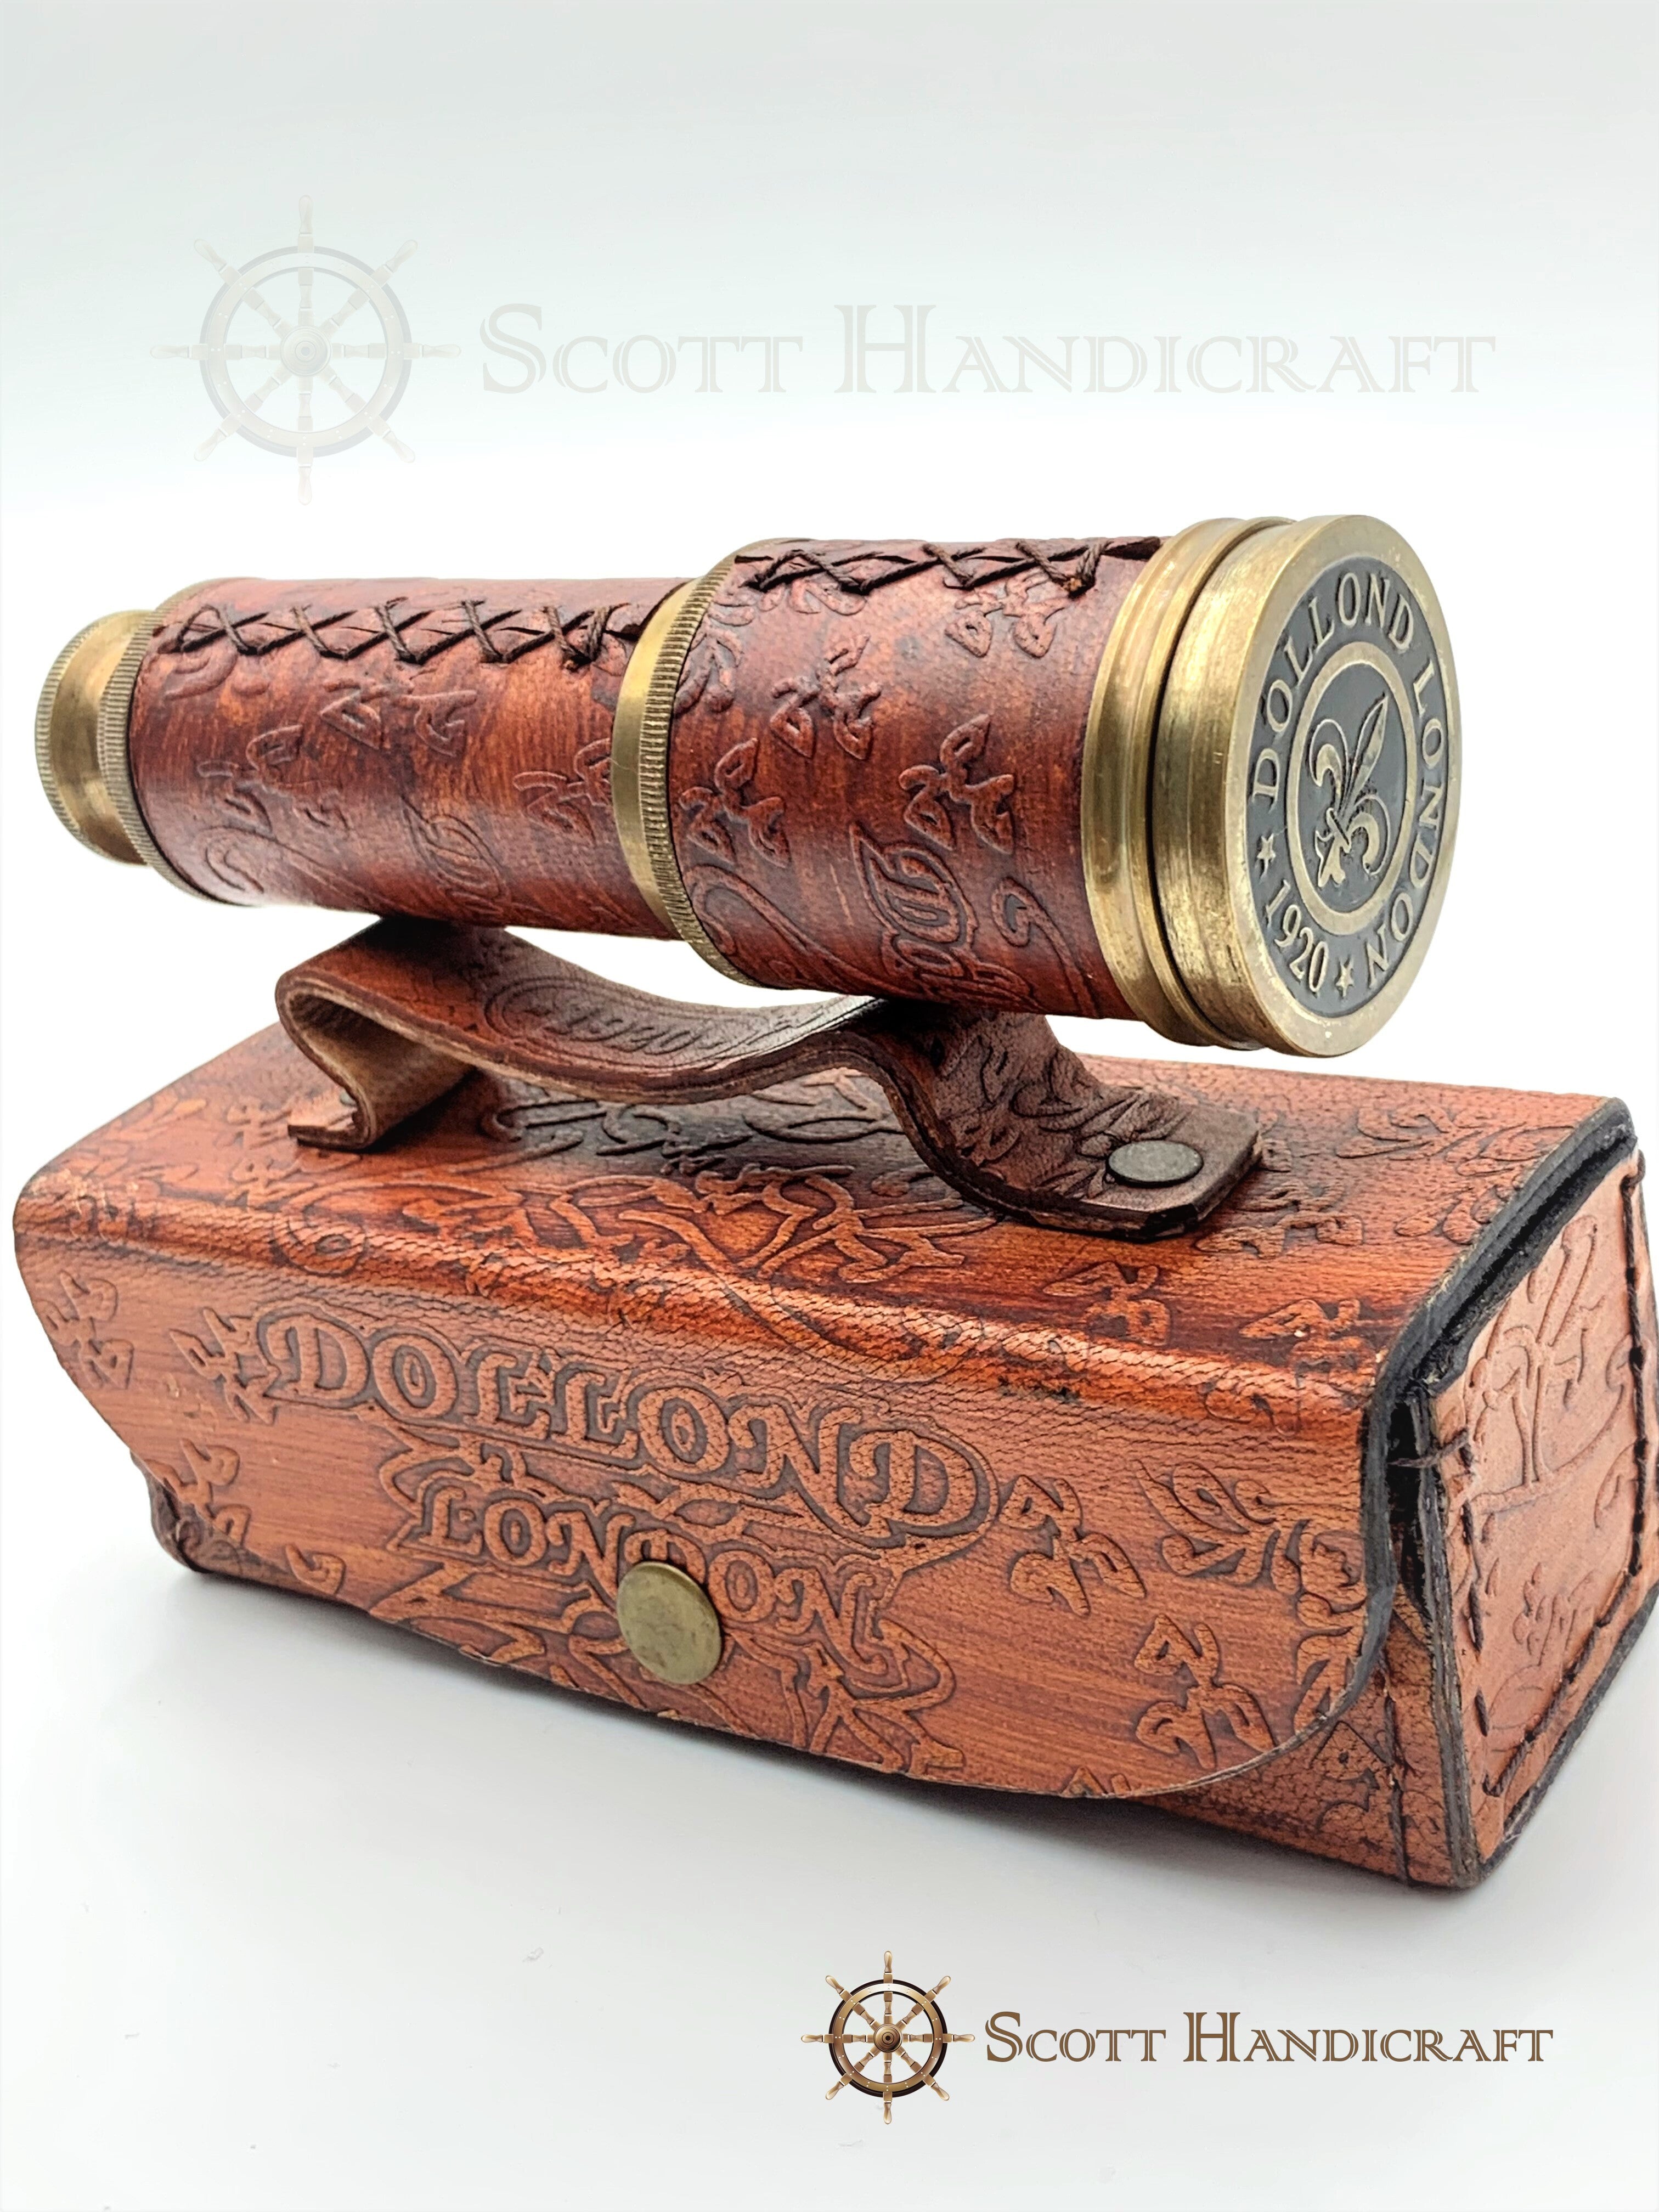 Scott Handicraft-Brass & Leather Dolland London 1920  model Nautical Telescope with Leather Box